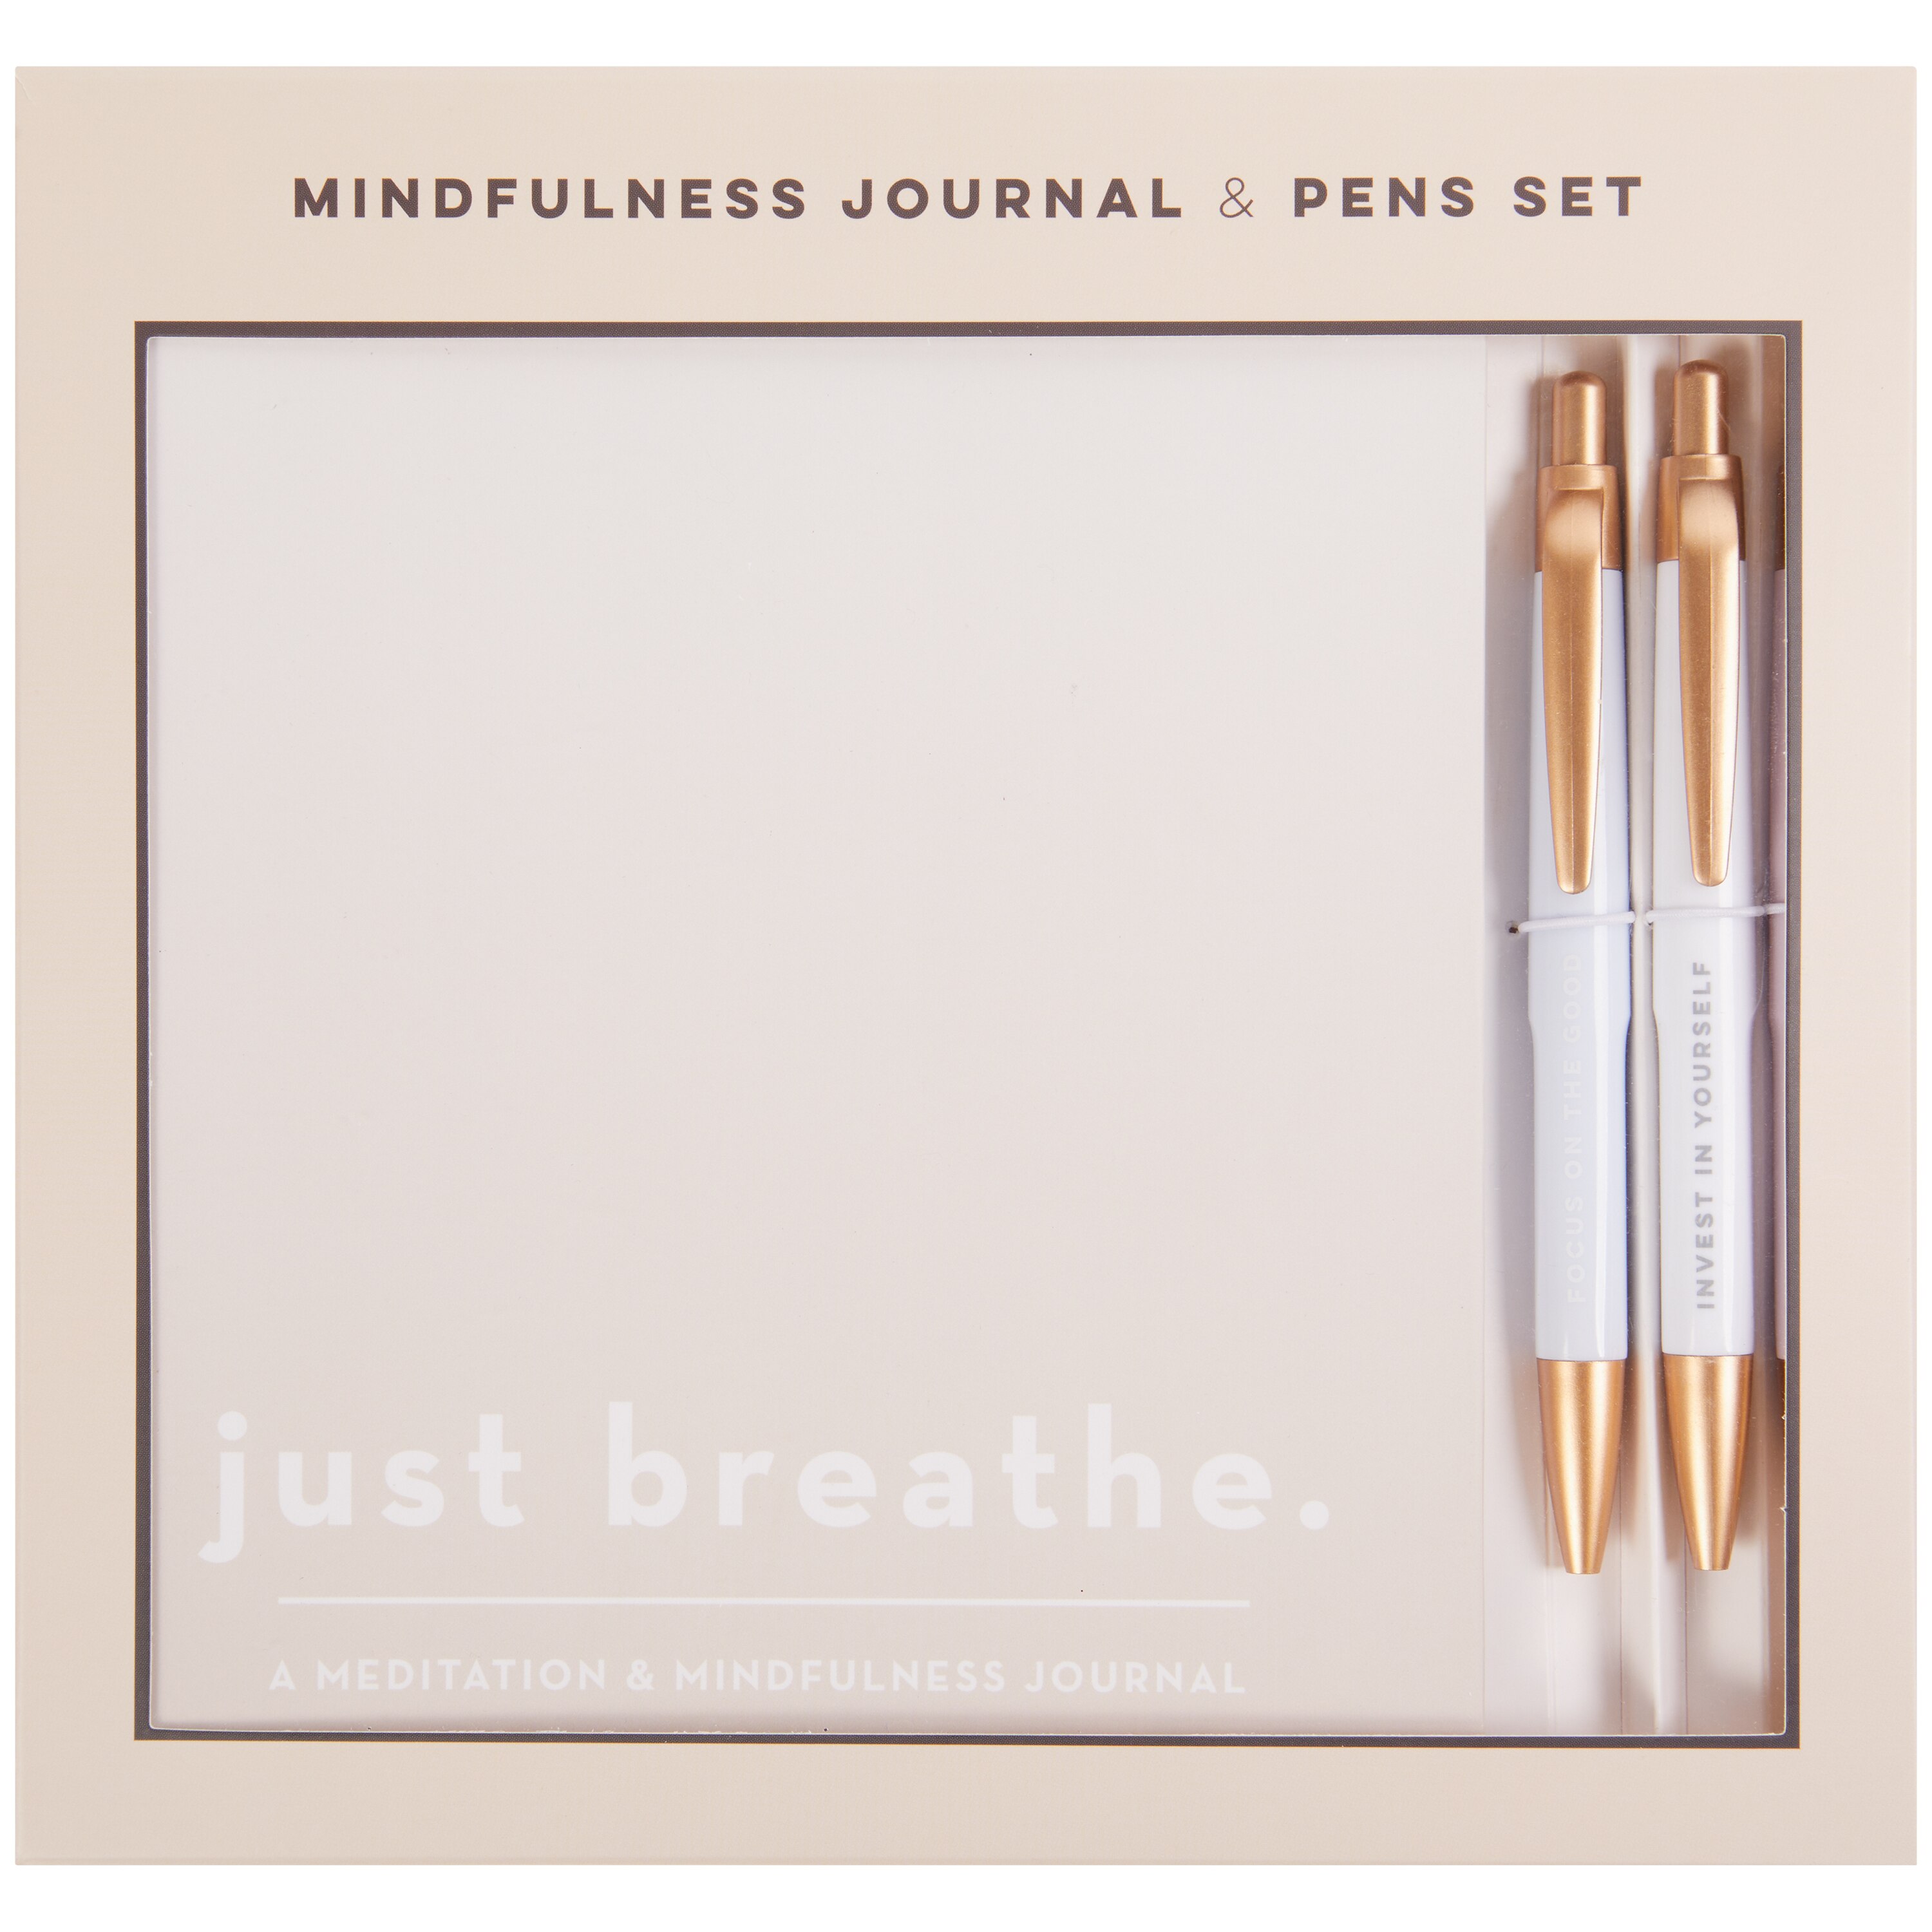 Gift Set To Be More Mindful - Gratitude Journal Set